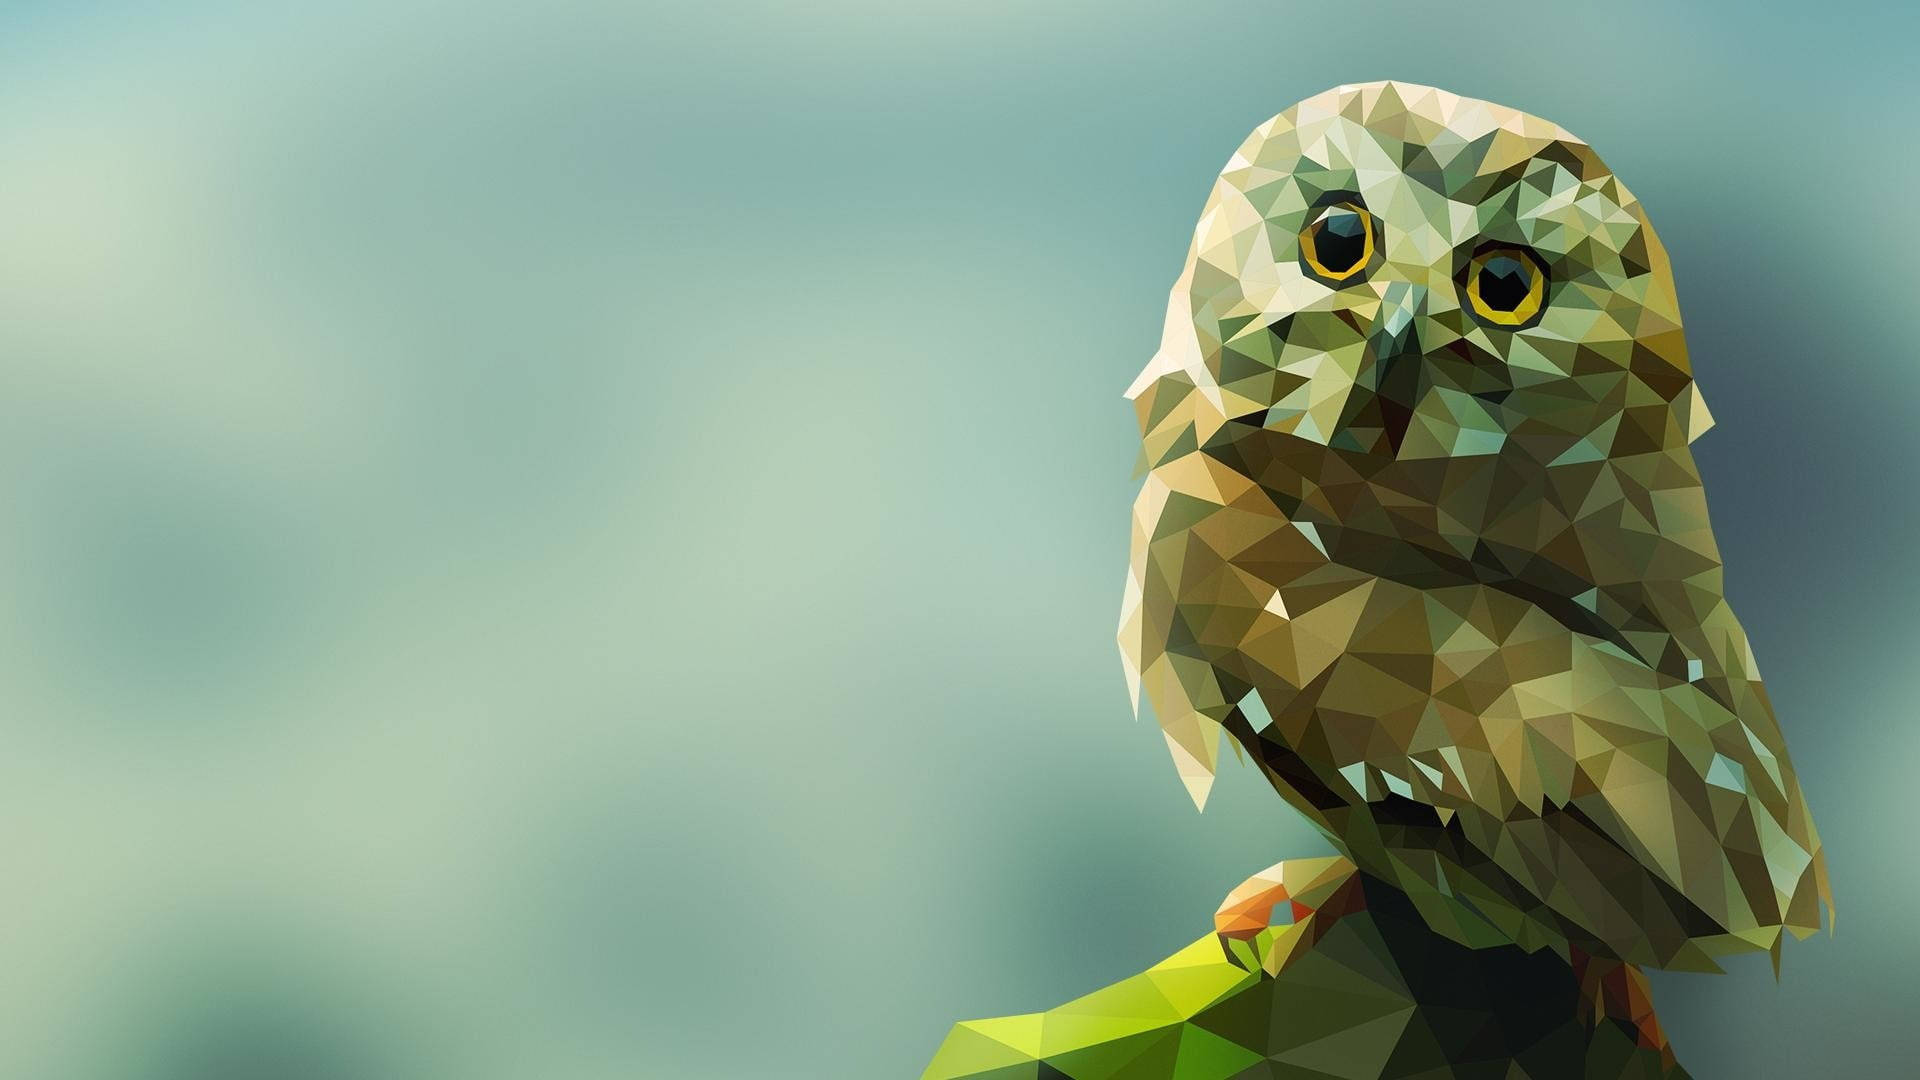 Polygon Art Owl Wallpaper